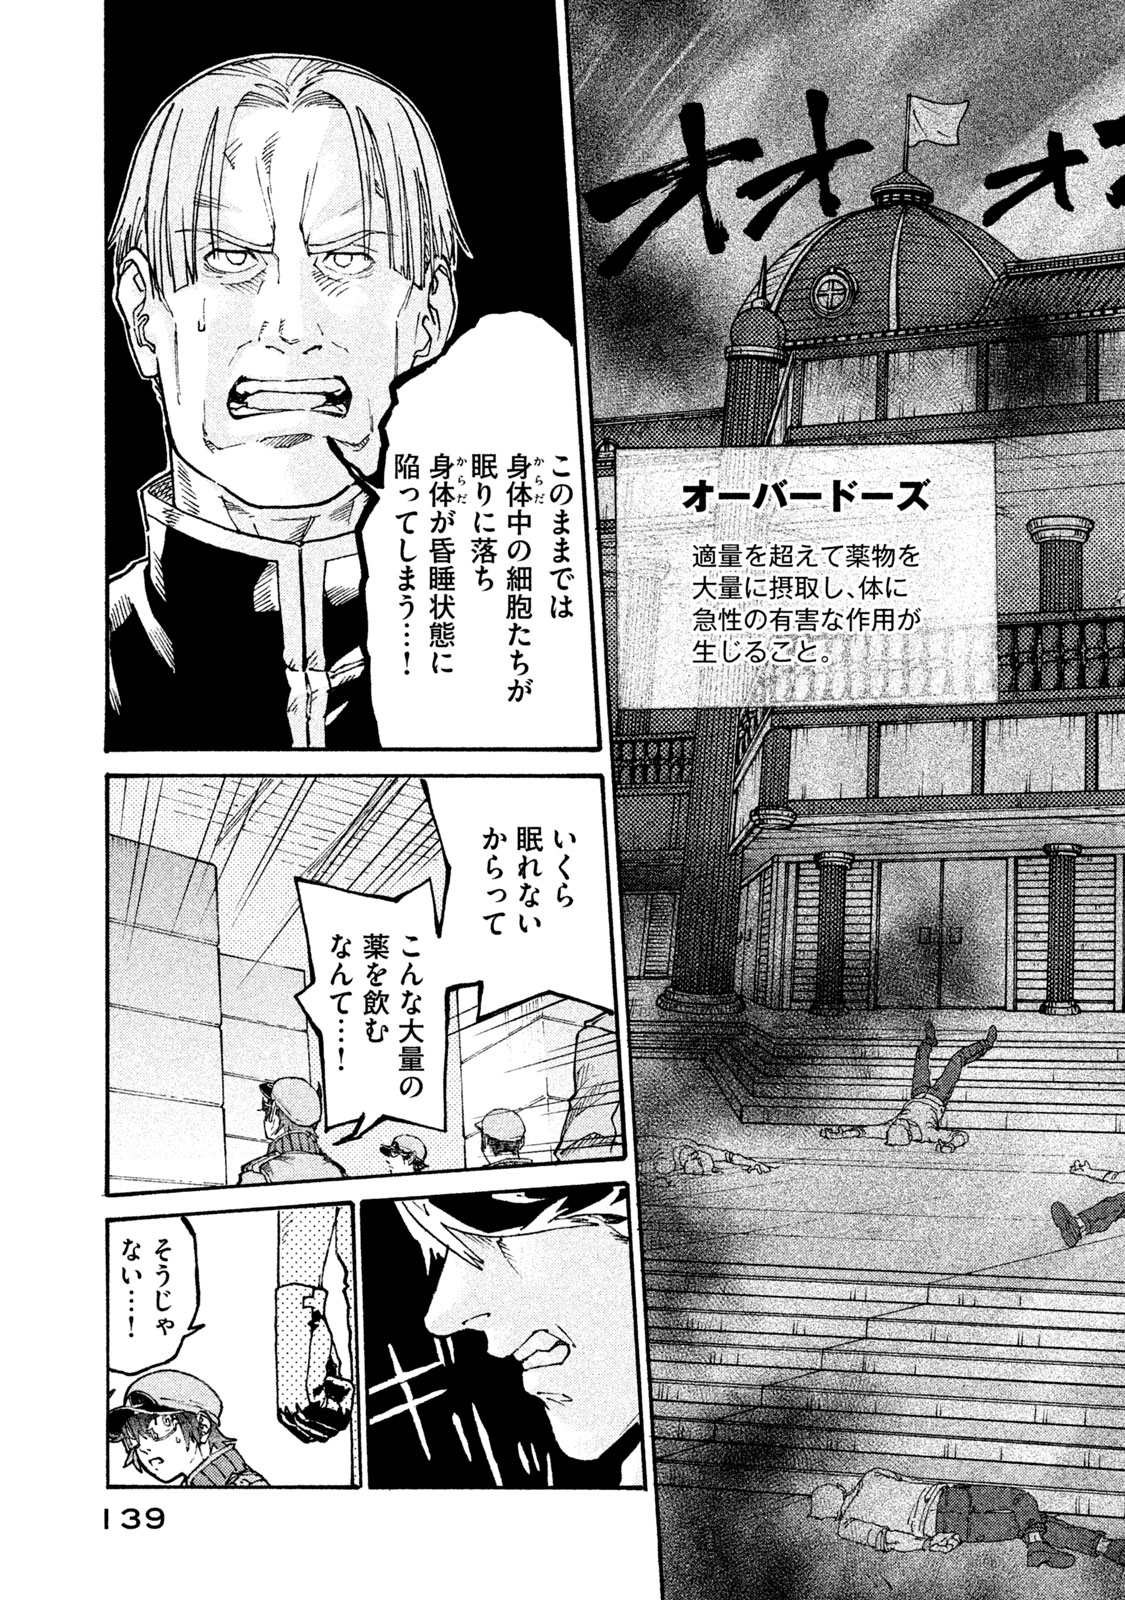 Hataraku Saibou BLACK - Chapter 31 - Page 15